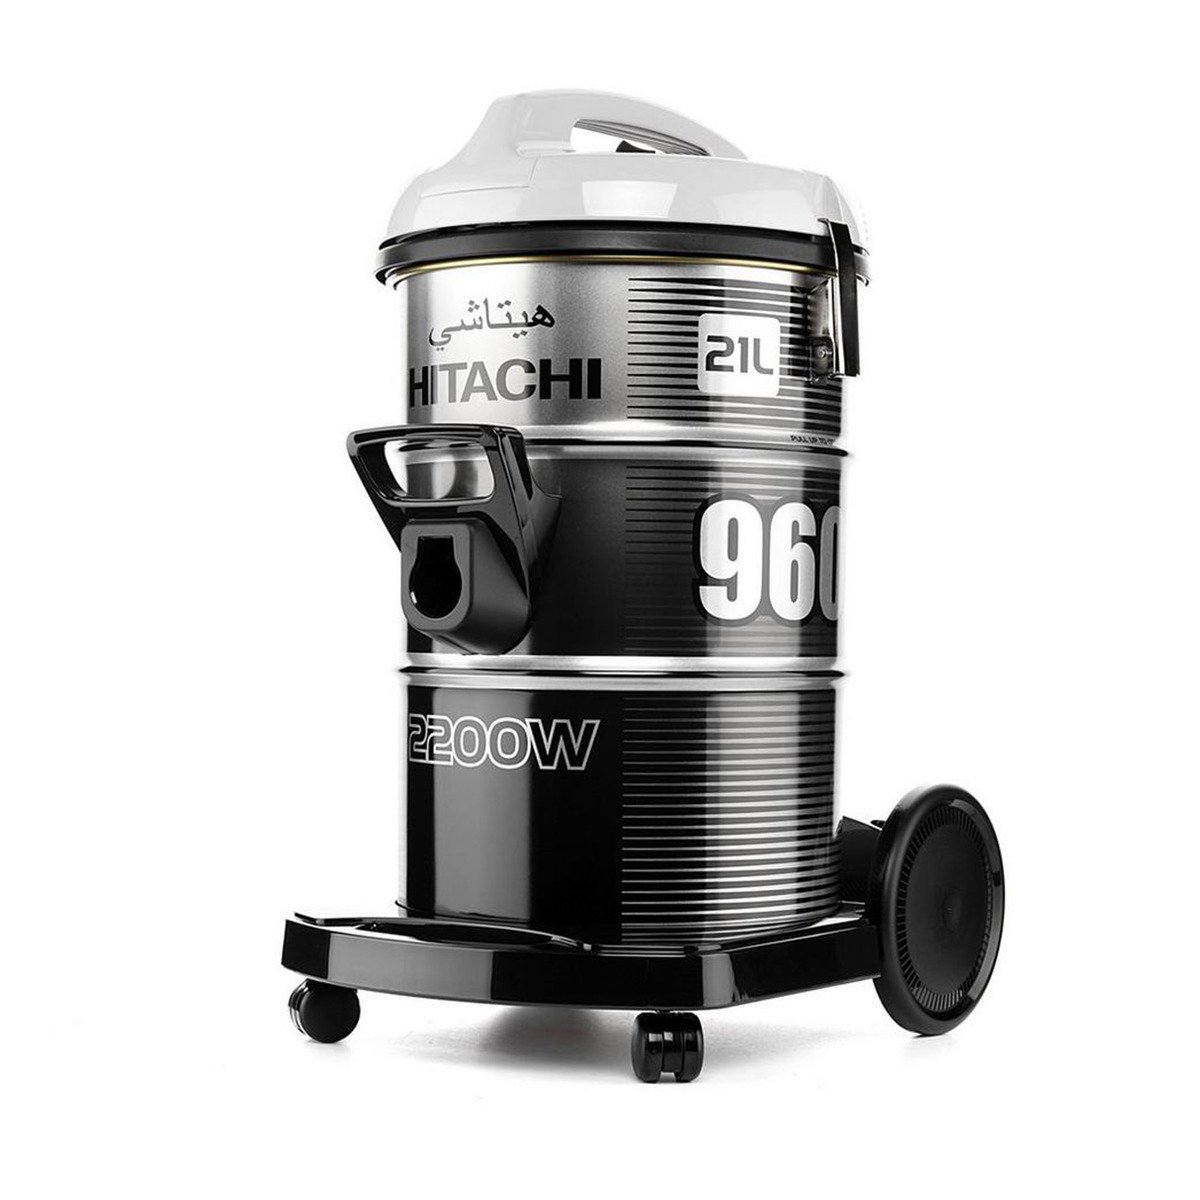 Hitachi Vacuum Cleaner CV960F-SS220PG 2200W